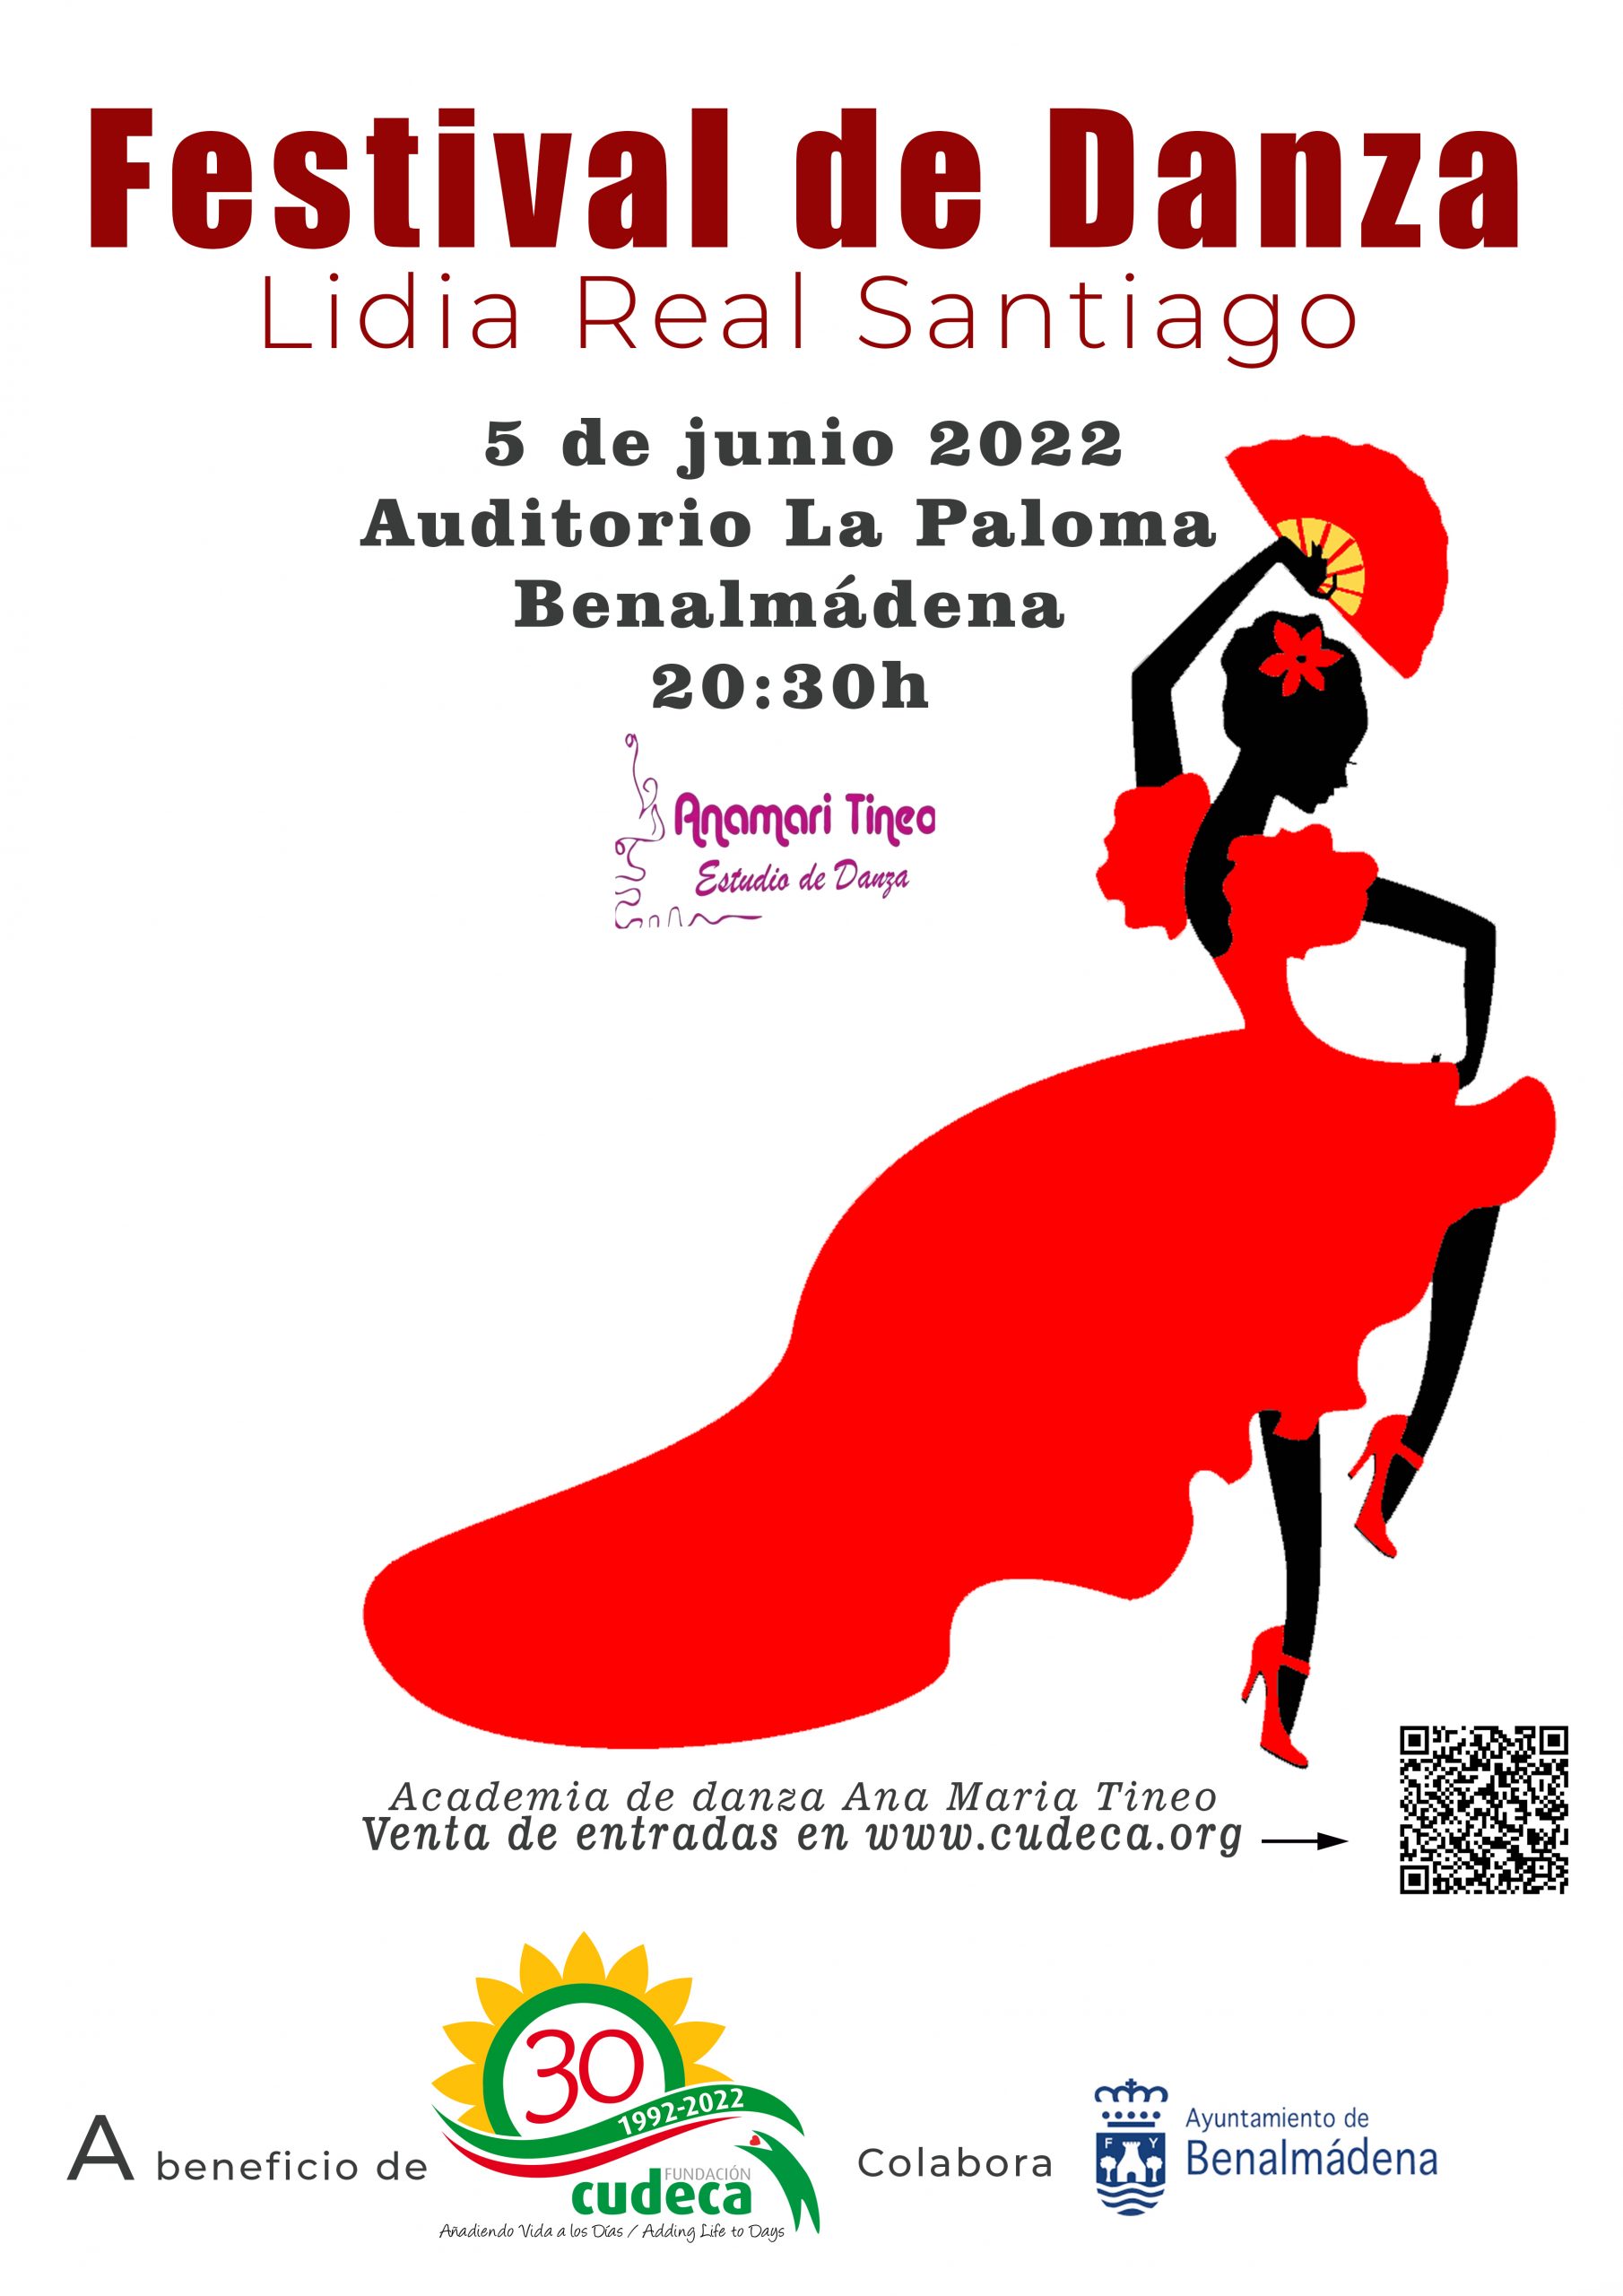 Festival de danza Lidia Real Santiago a beneficio de Cudeca